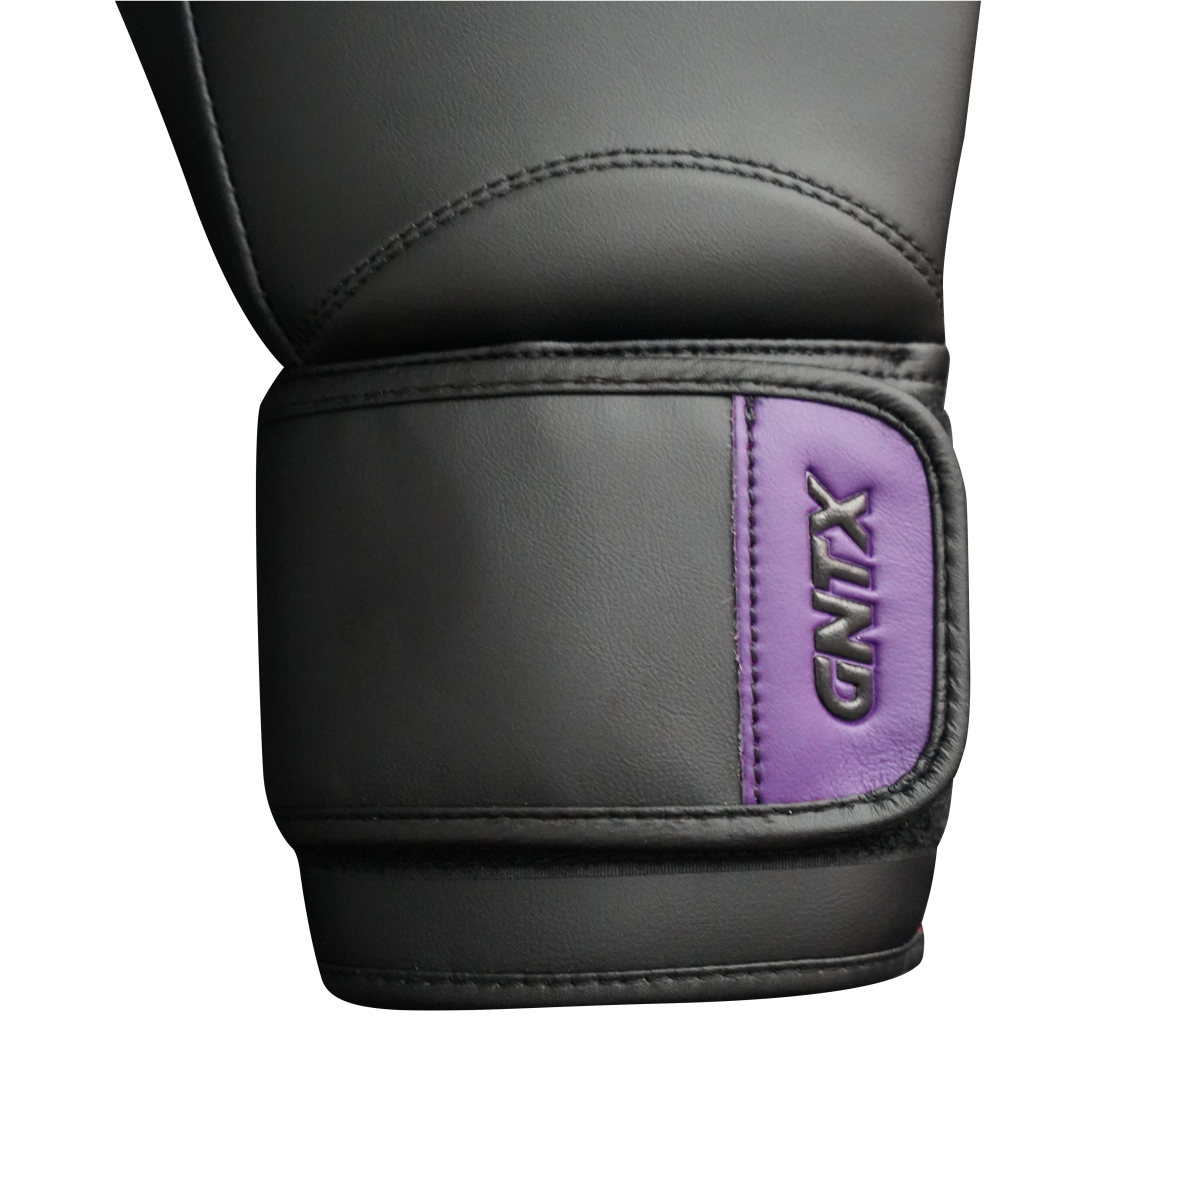 GENETIX COMBAT GNTX Boxing Gloves GBG5 BlackPurple